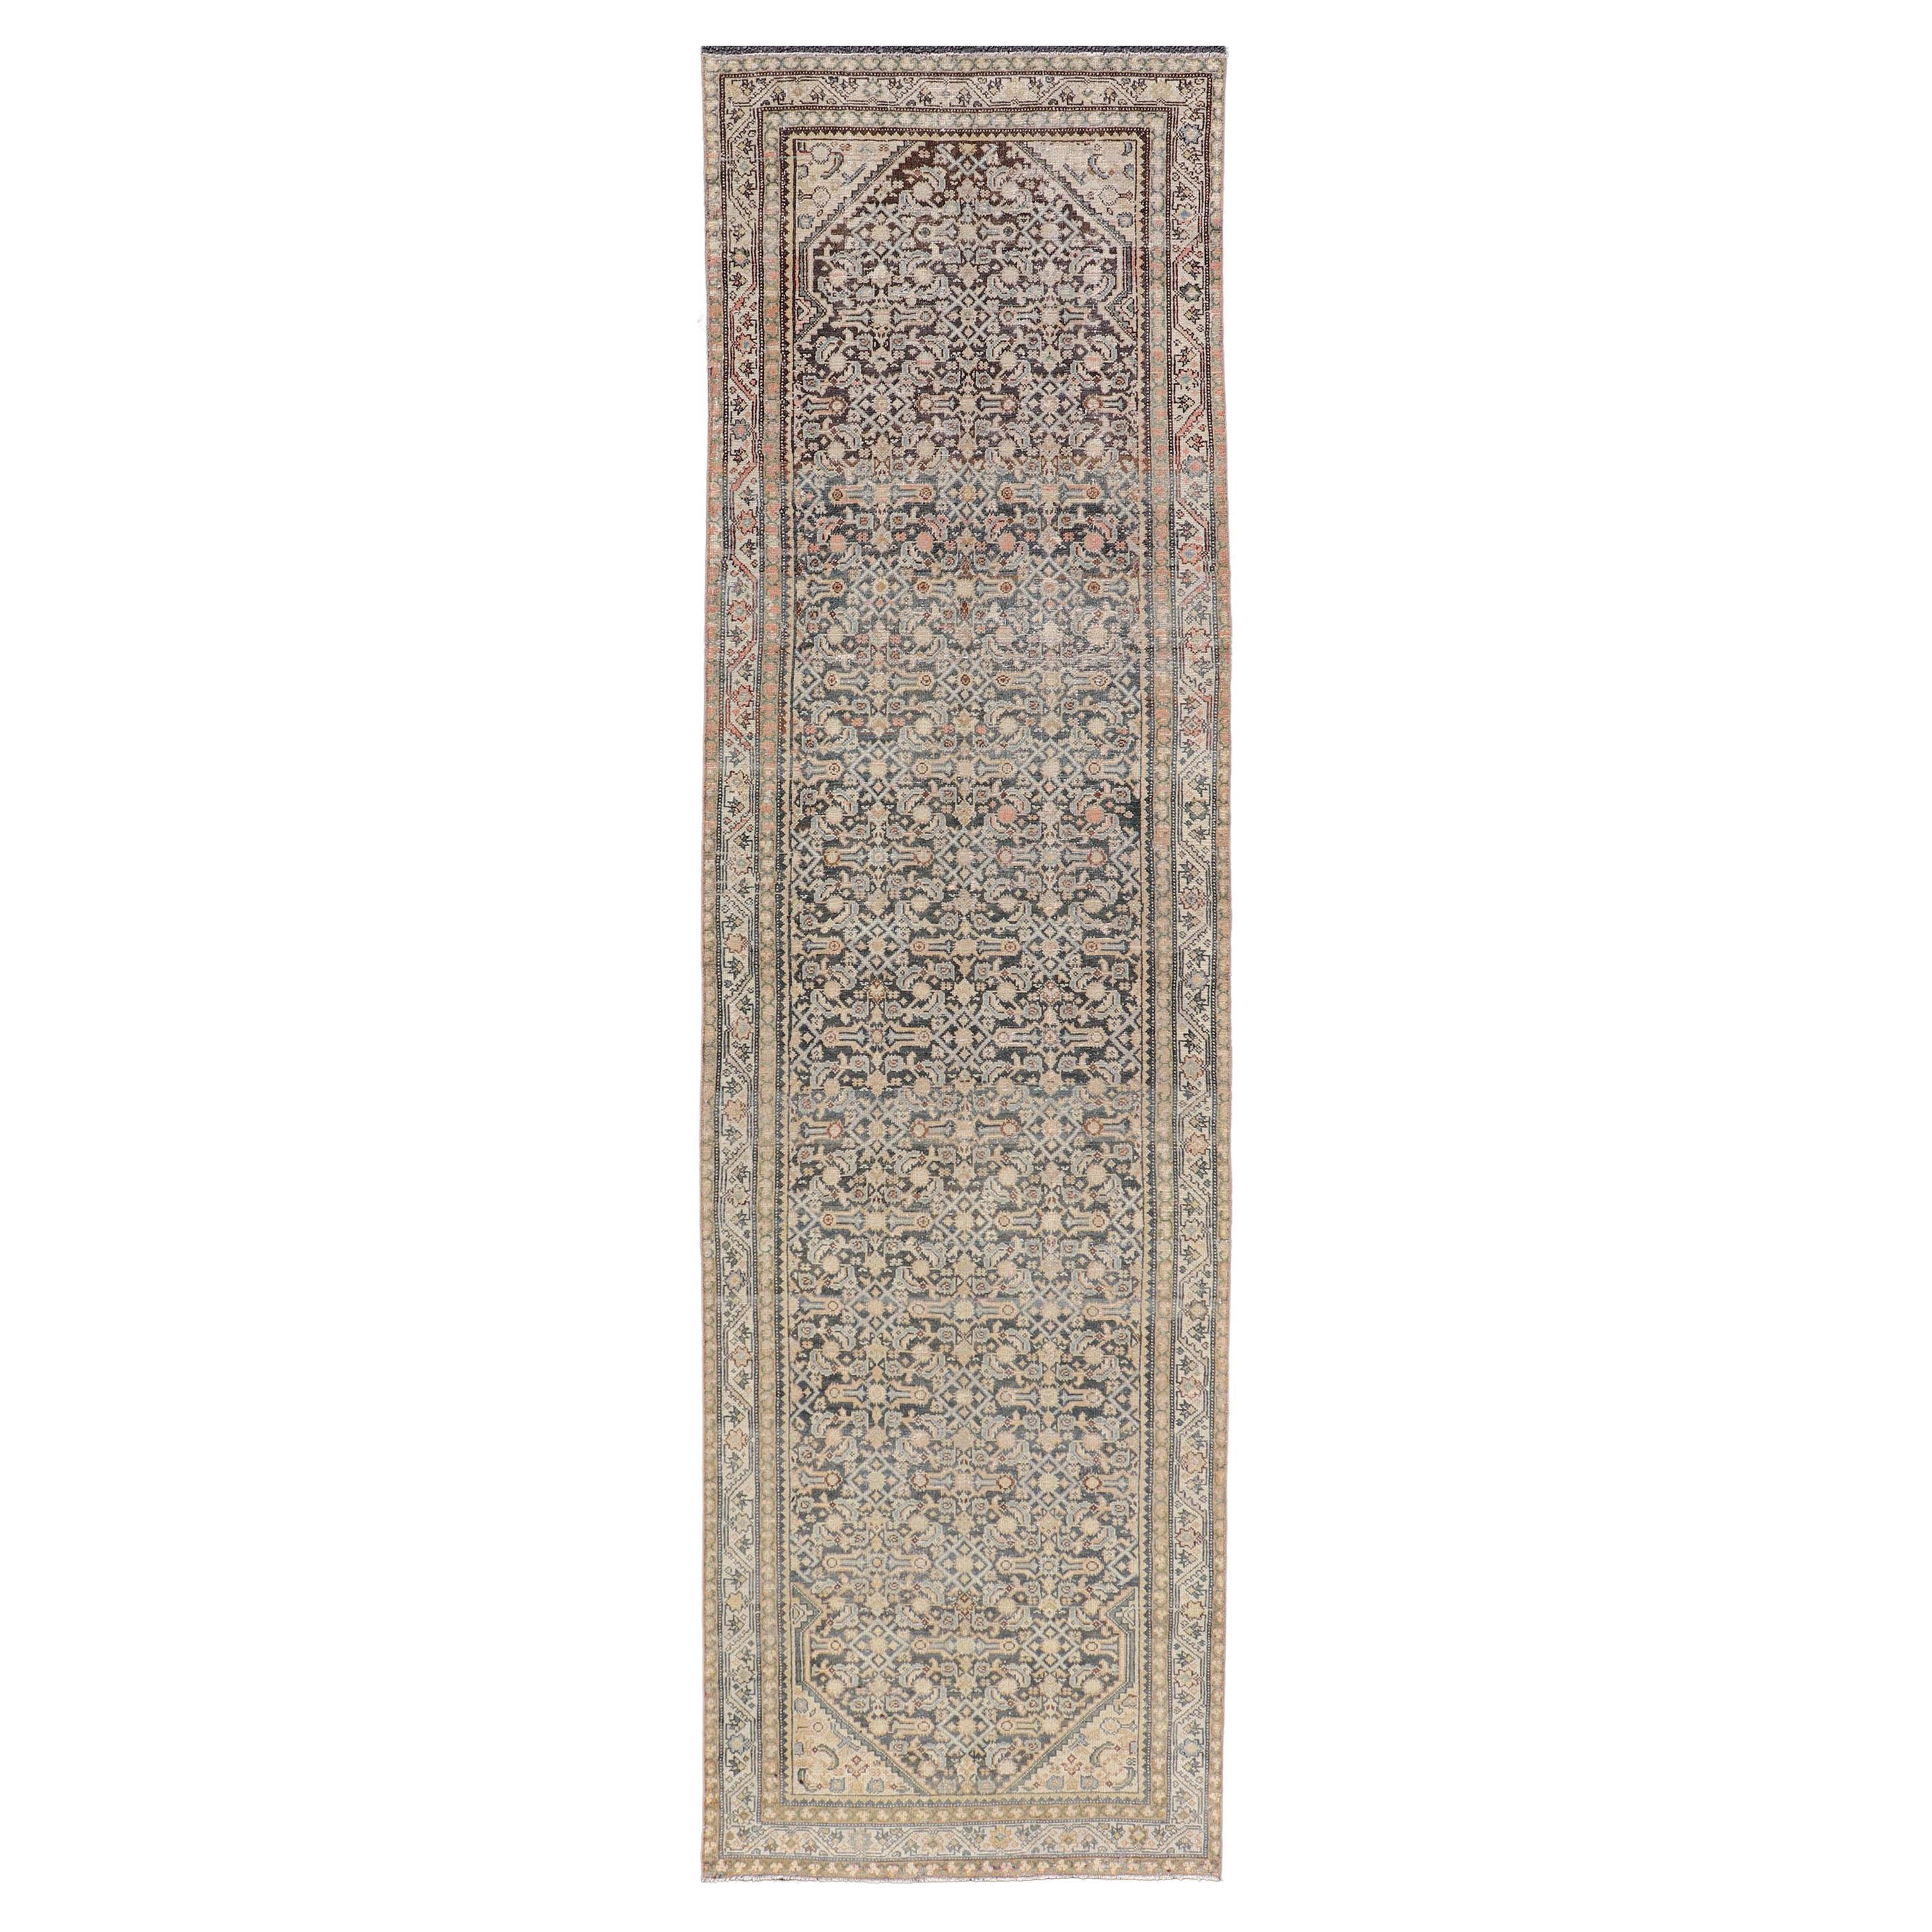 Antique Persian Hamedan Runner with Sub-Geometric Design in Gray and Cream